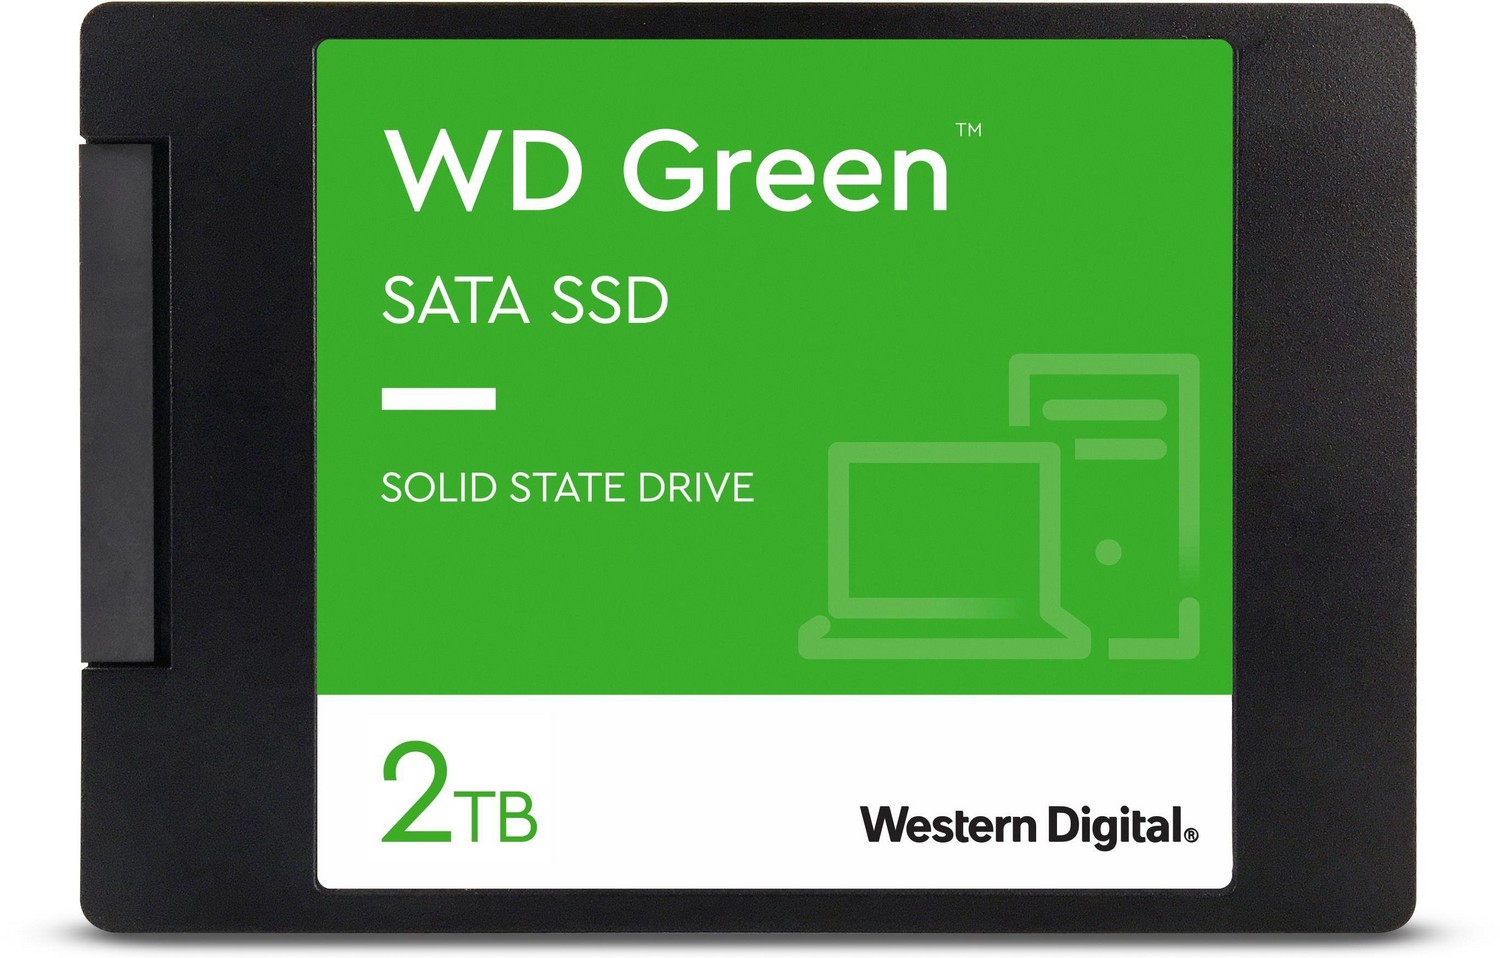 SSD ディスク - WD Green SSD 2TB